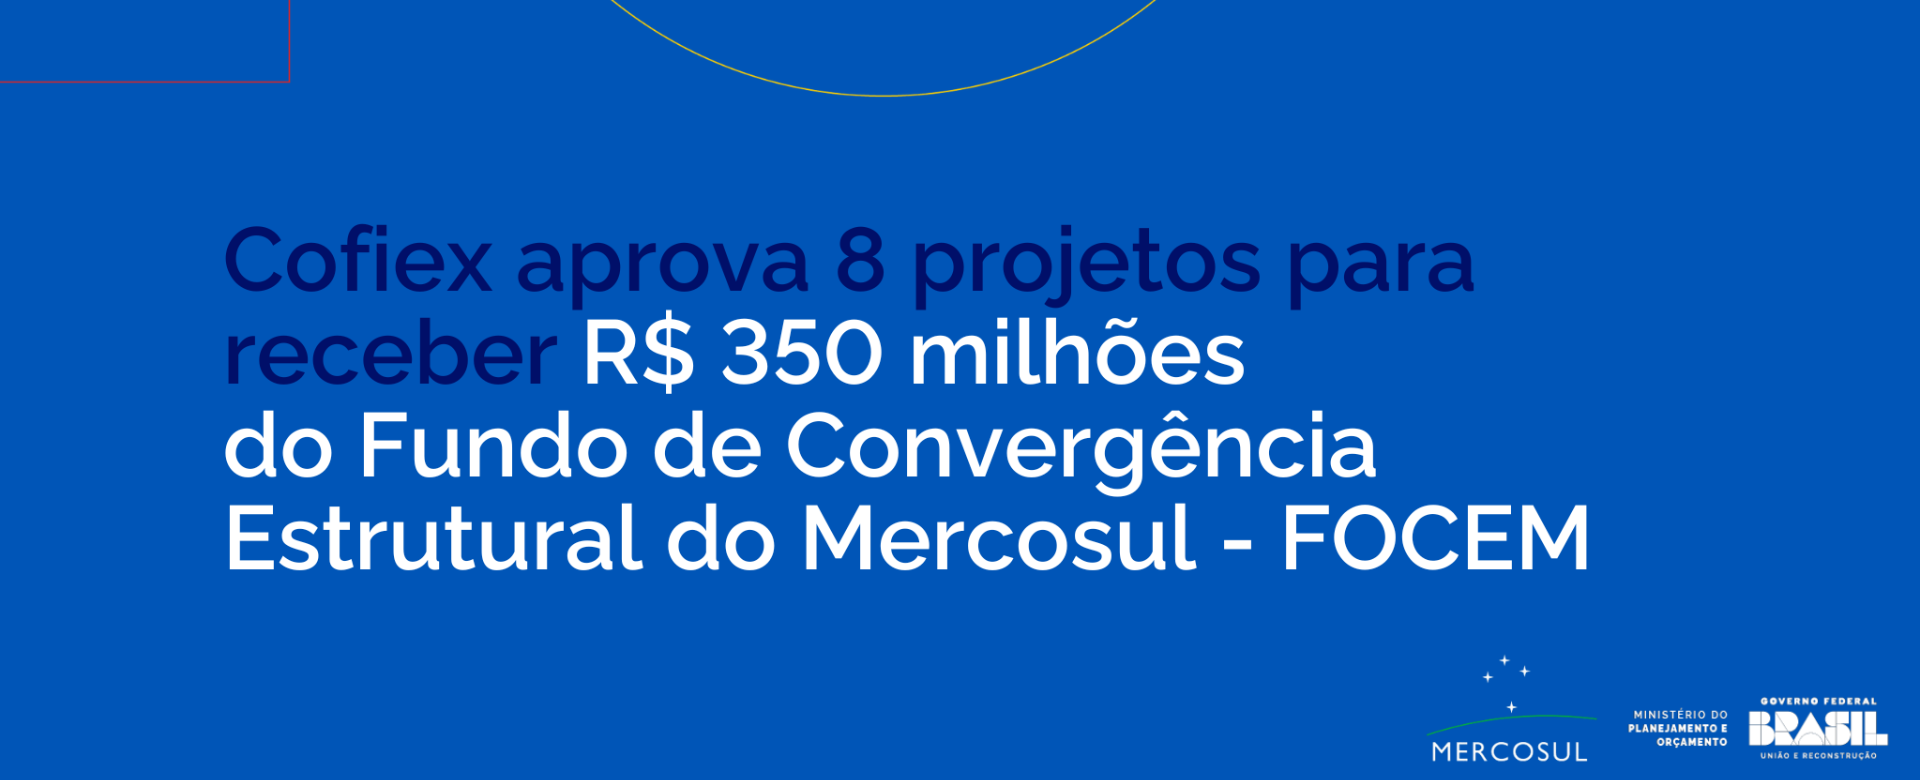 Fundo de Convergência Estrutural do Mercosul.png